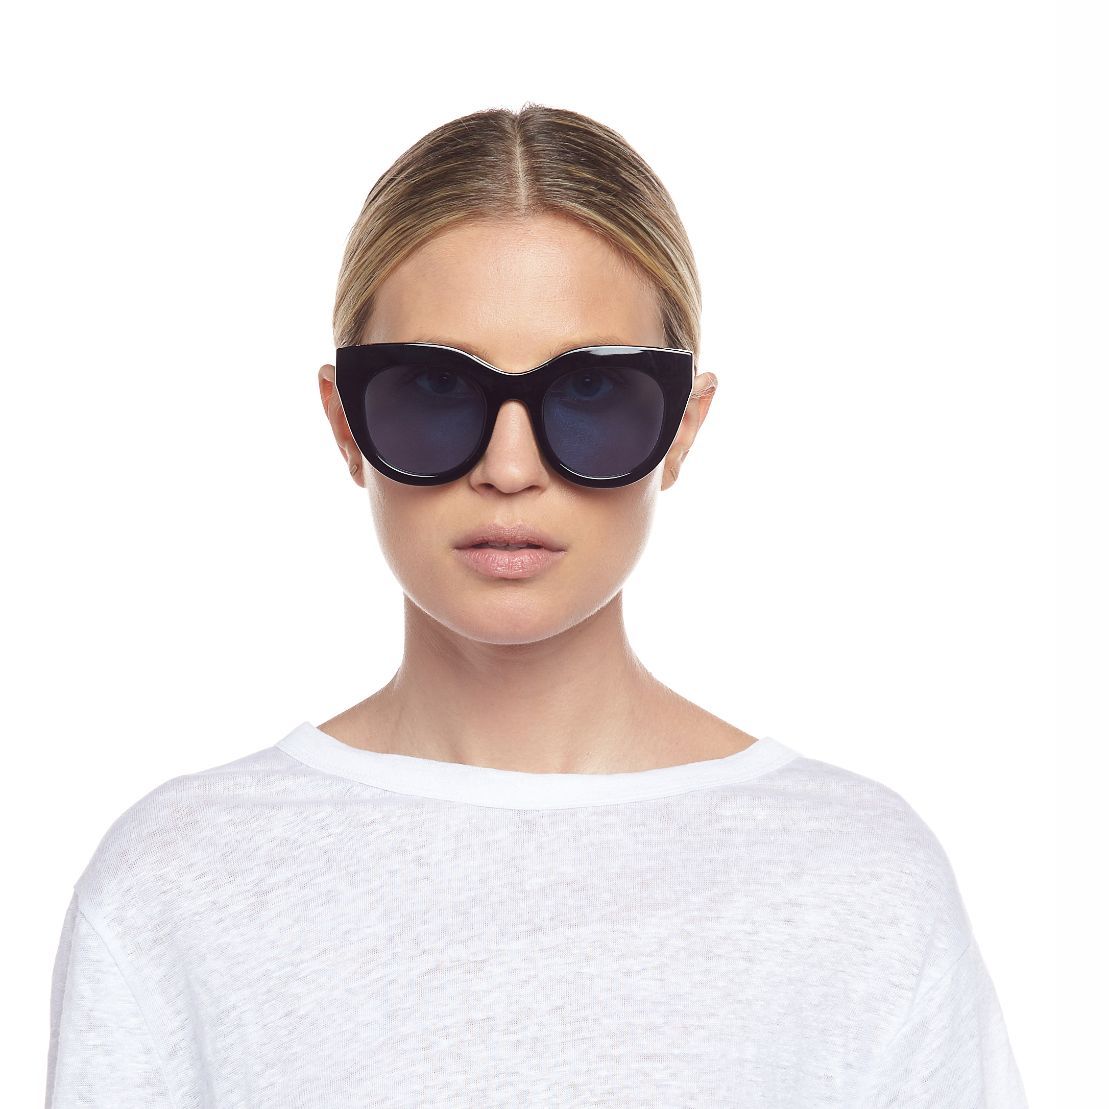 black sunglasses from Australian label Le Specs